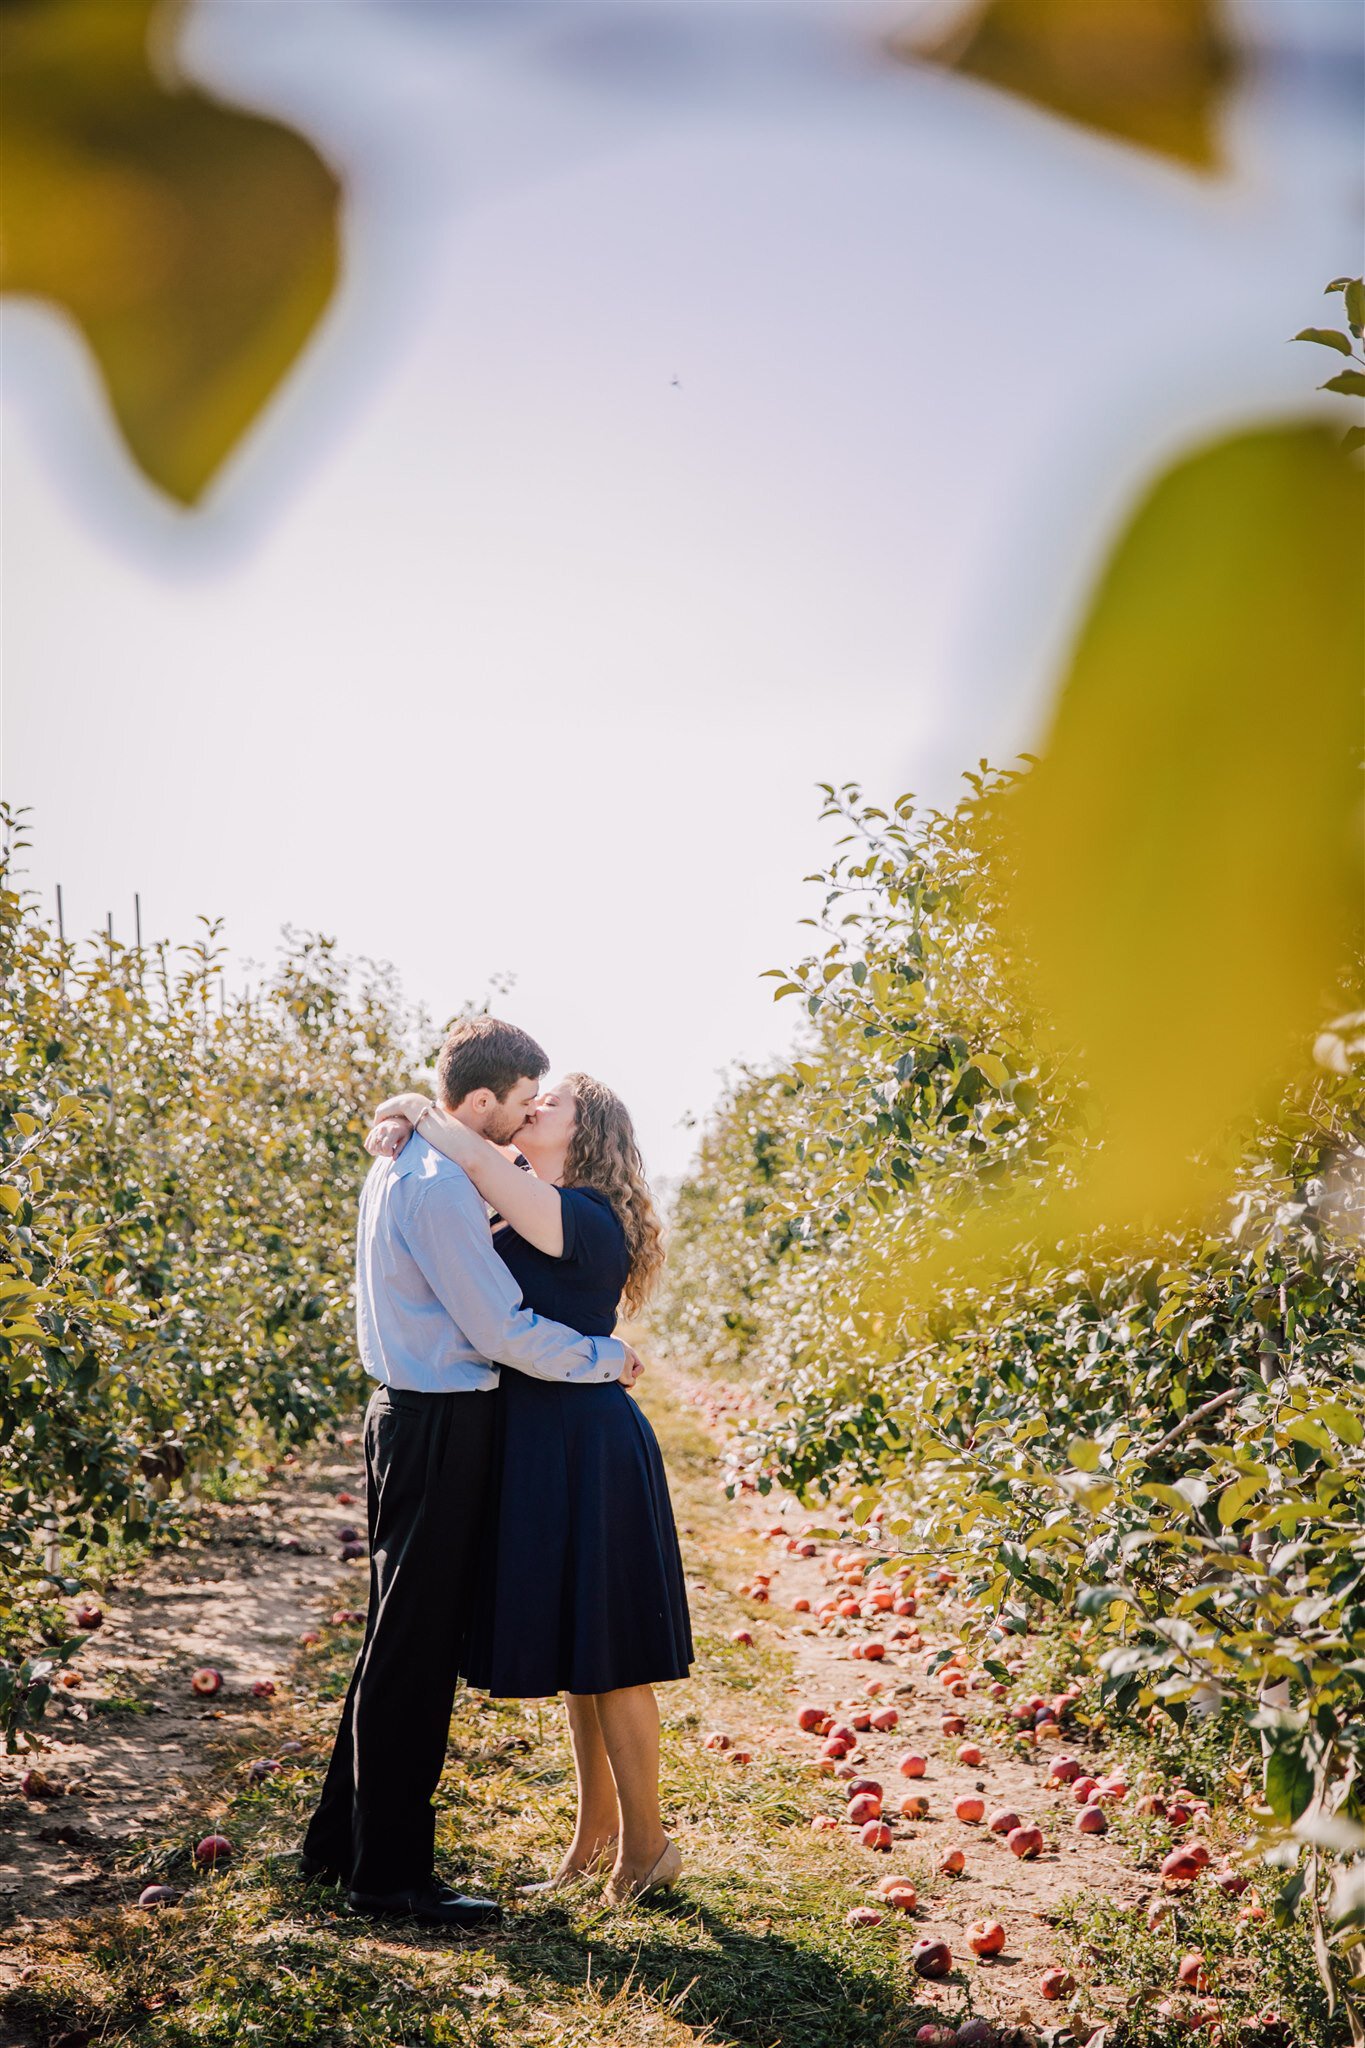 Marisa & Alex's Apple Orchard Engagement Pictures 2021